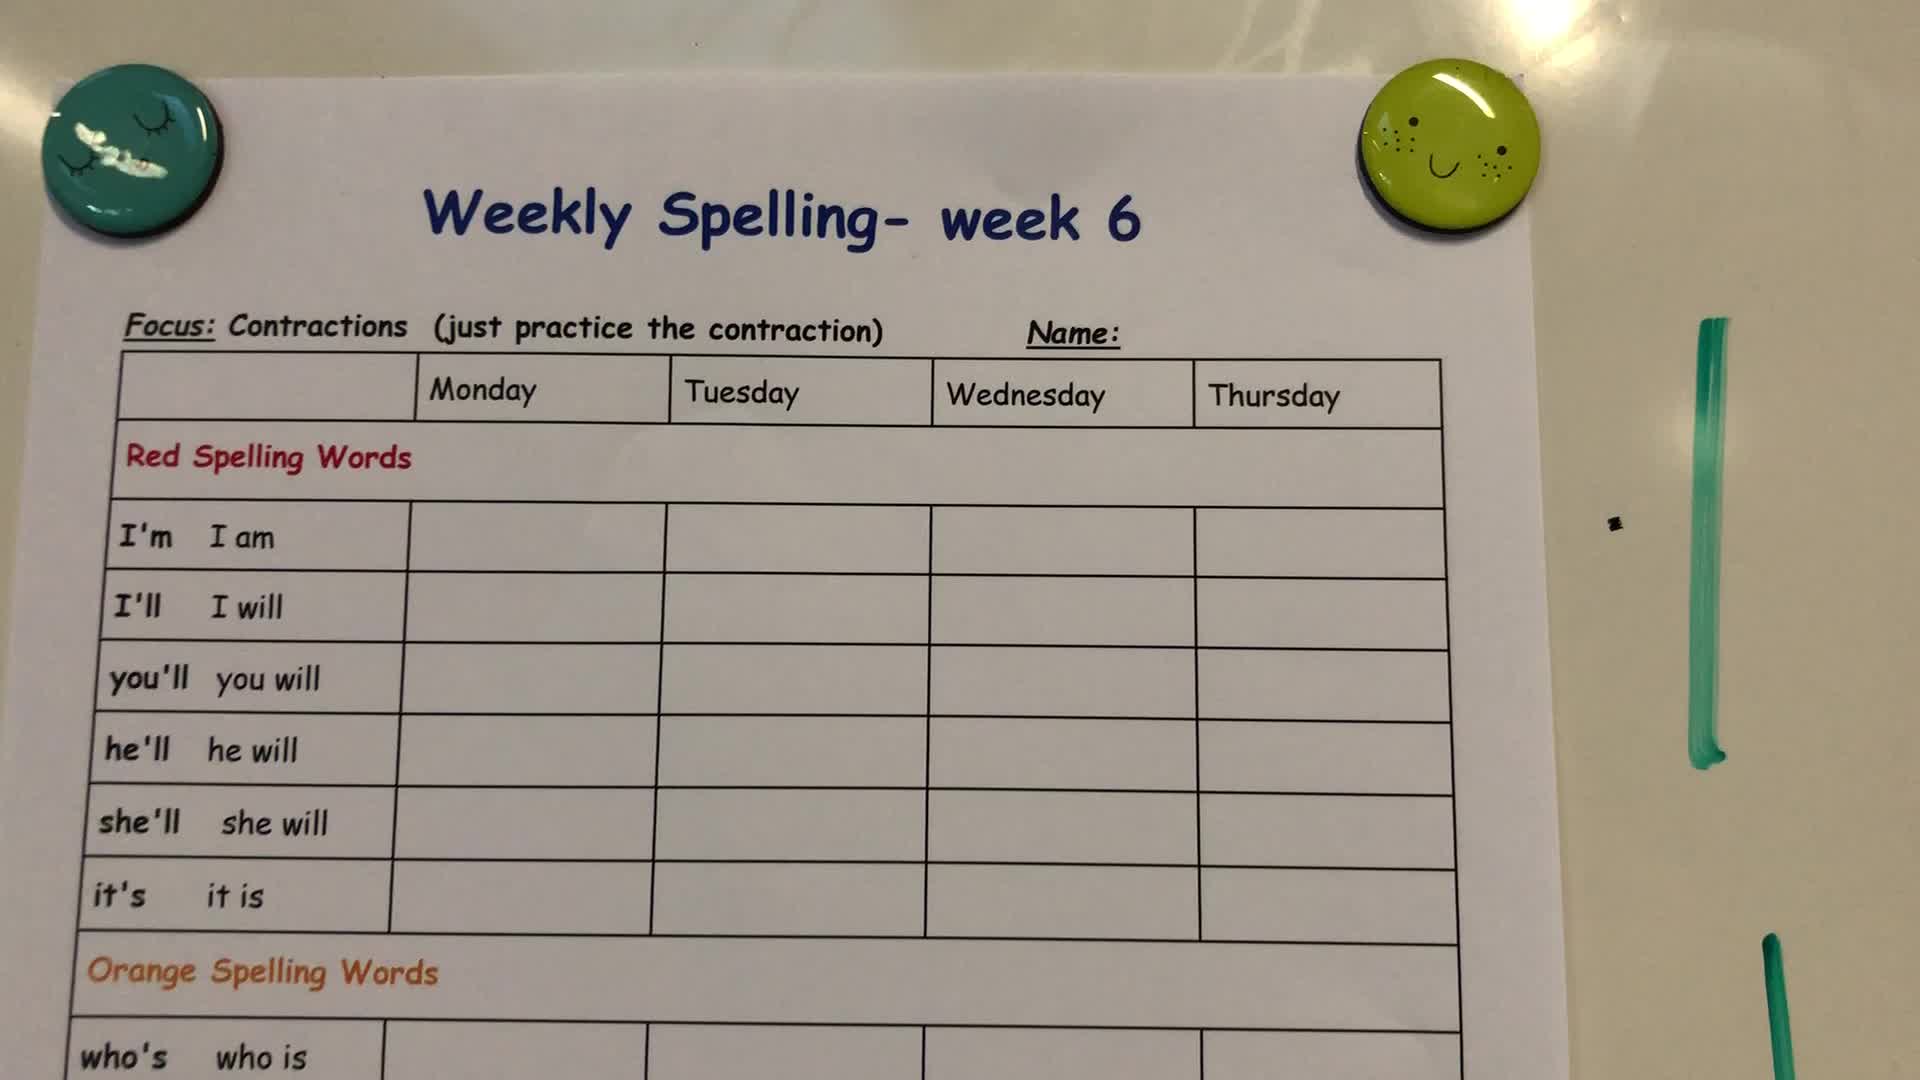 Week 6 Spelling List- contractions